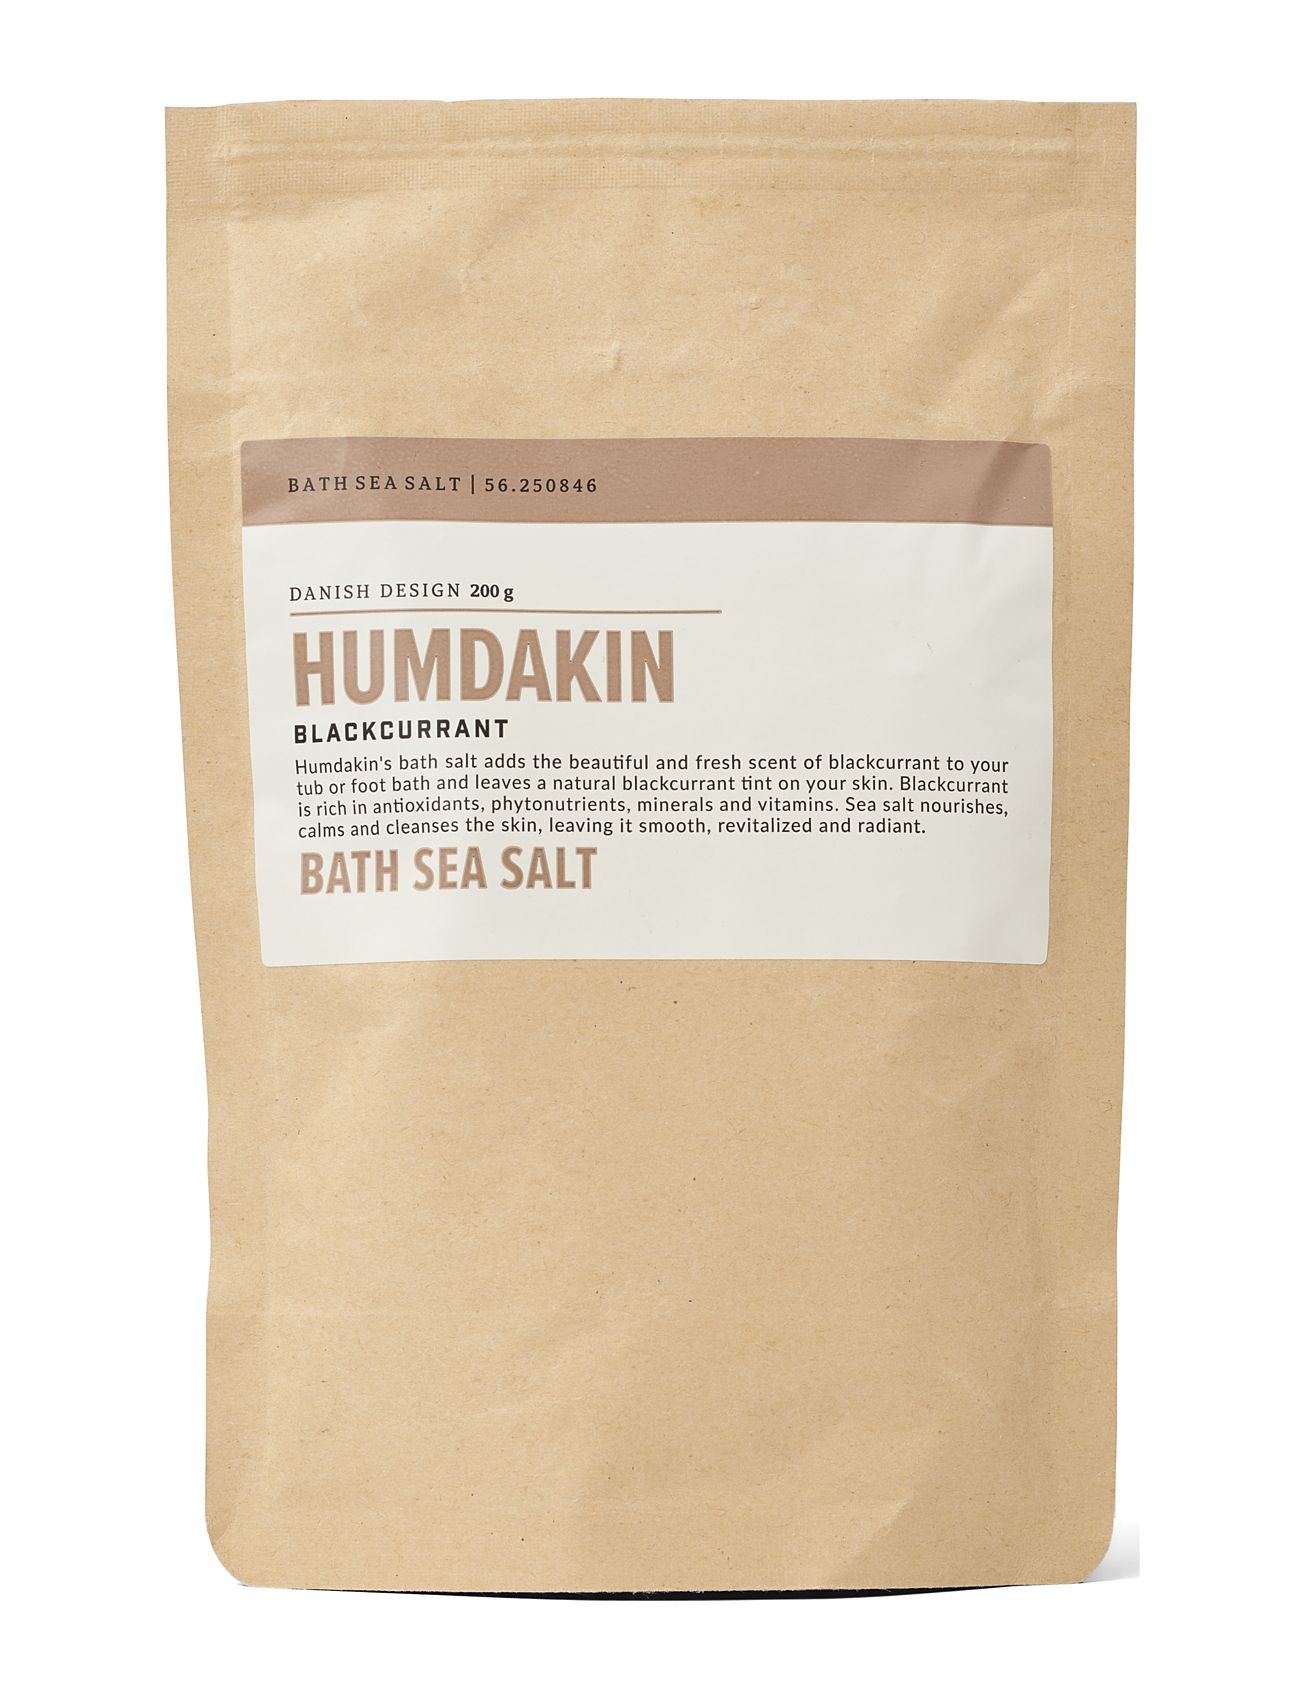 Bath Sea Salt Beauty Women Skin Care Bath Products Nude Humdakin